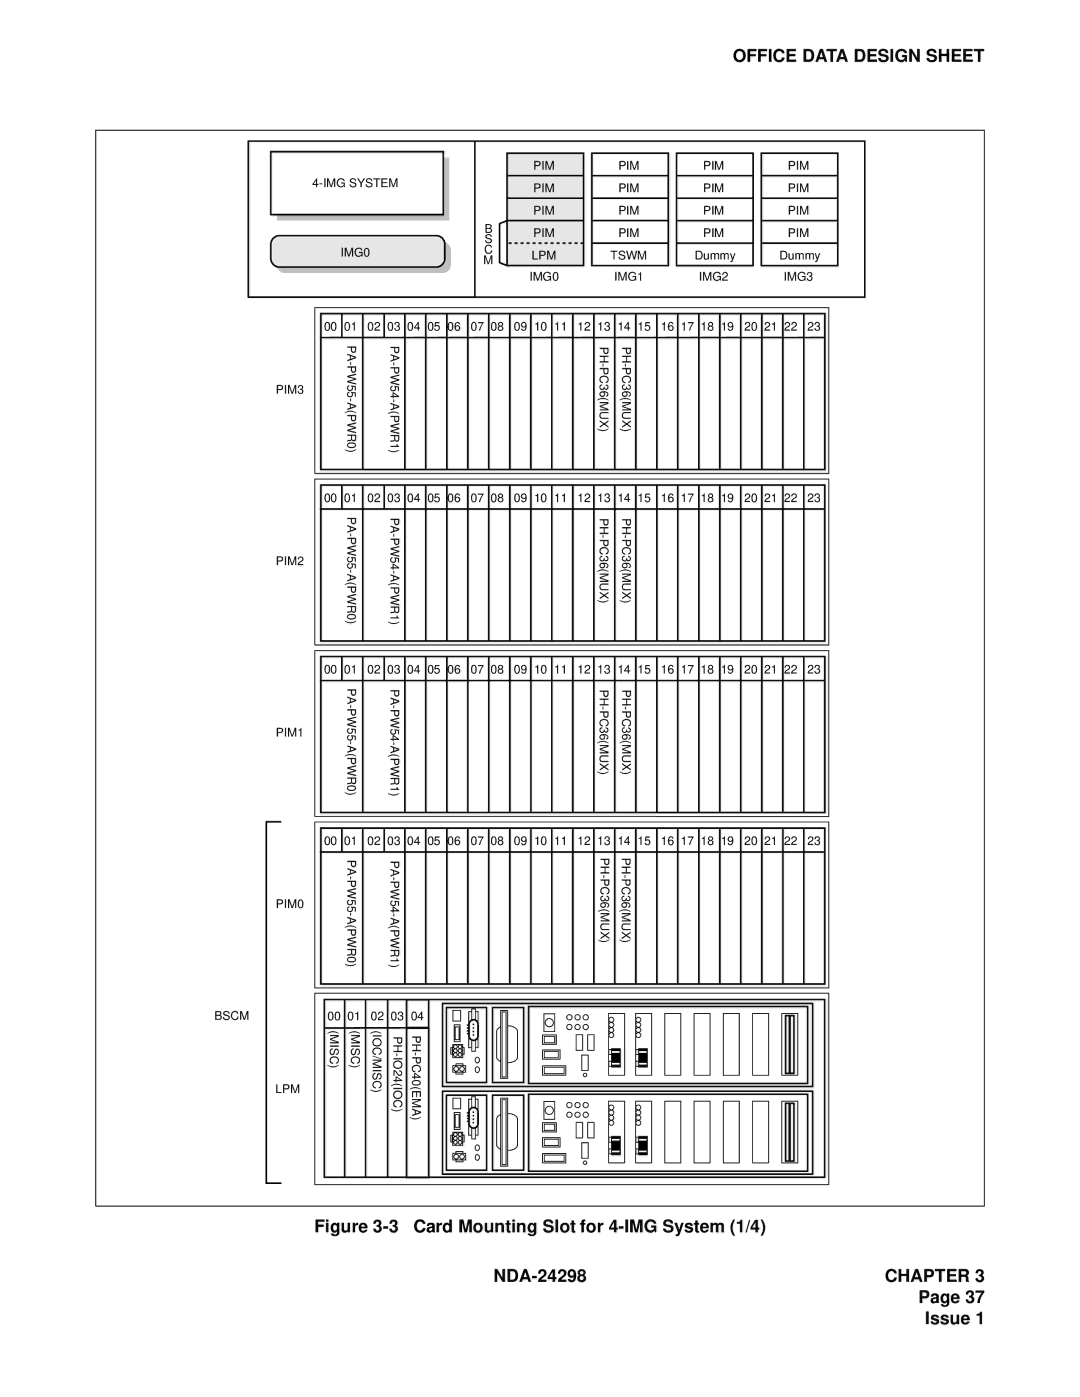 NEC NDA-24298 manual Card Mounting Slot for 4-IMG System 1/4 